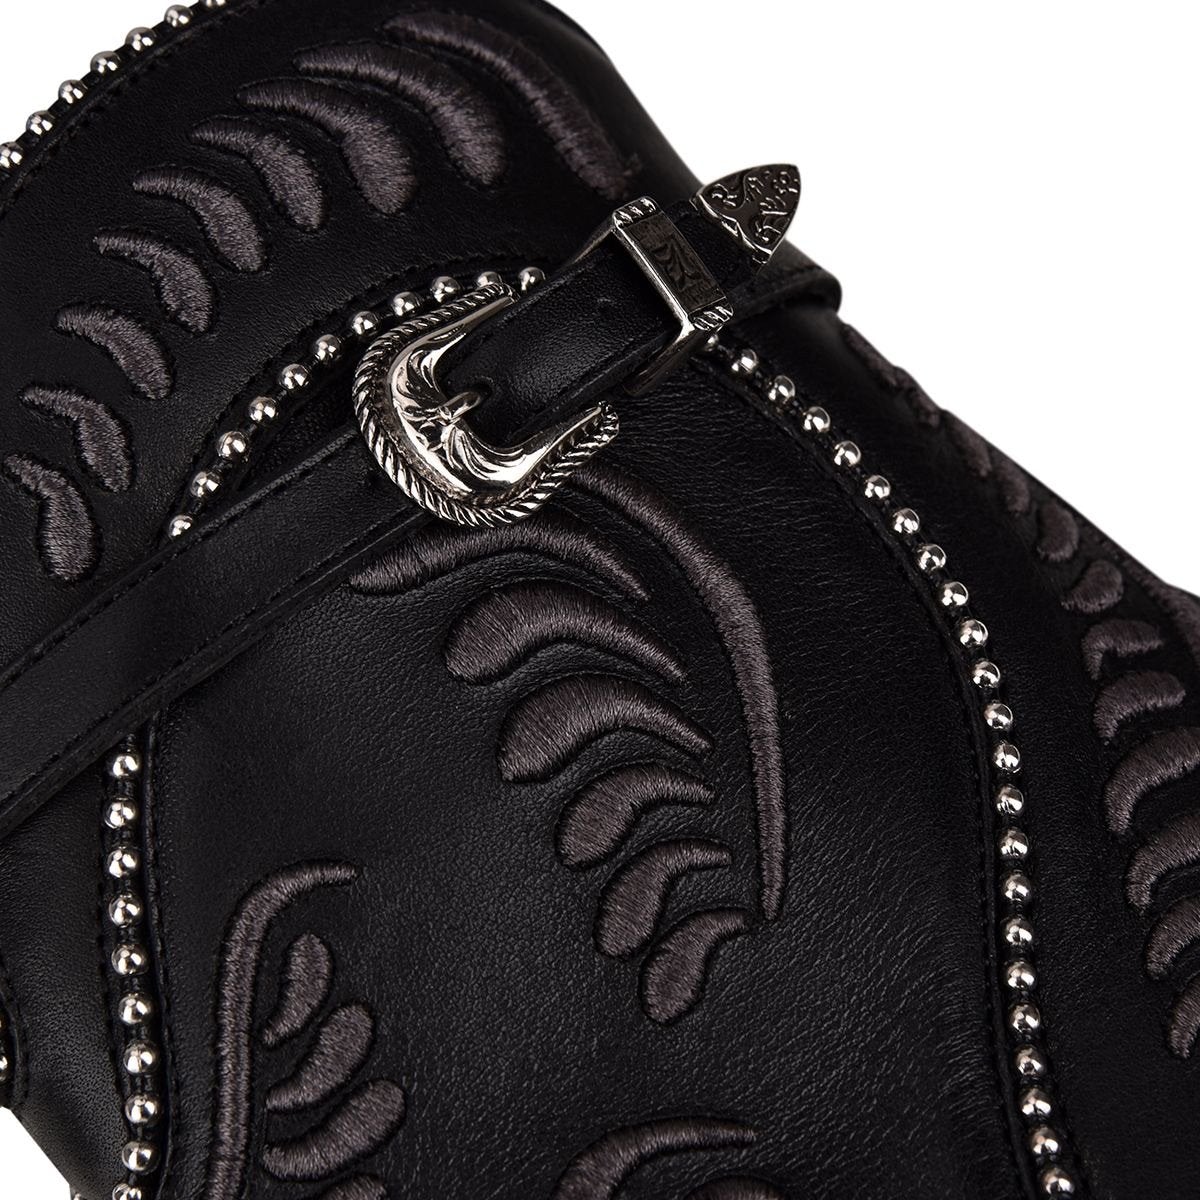 3F59PH - Cuadra black dress cowgirl python skin ankle boots for women-Kuet.us